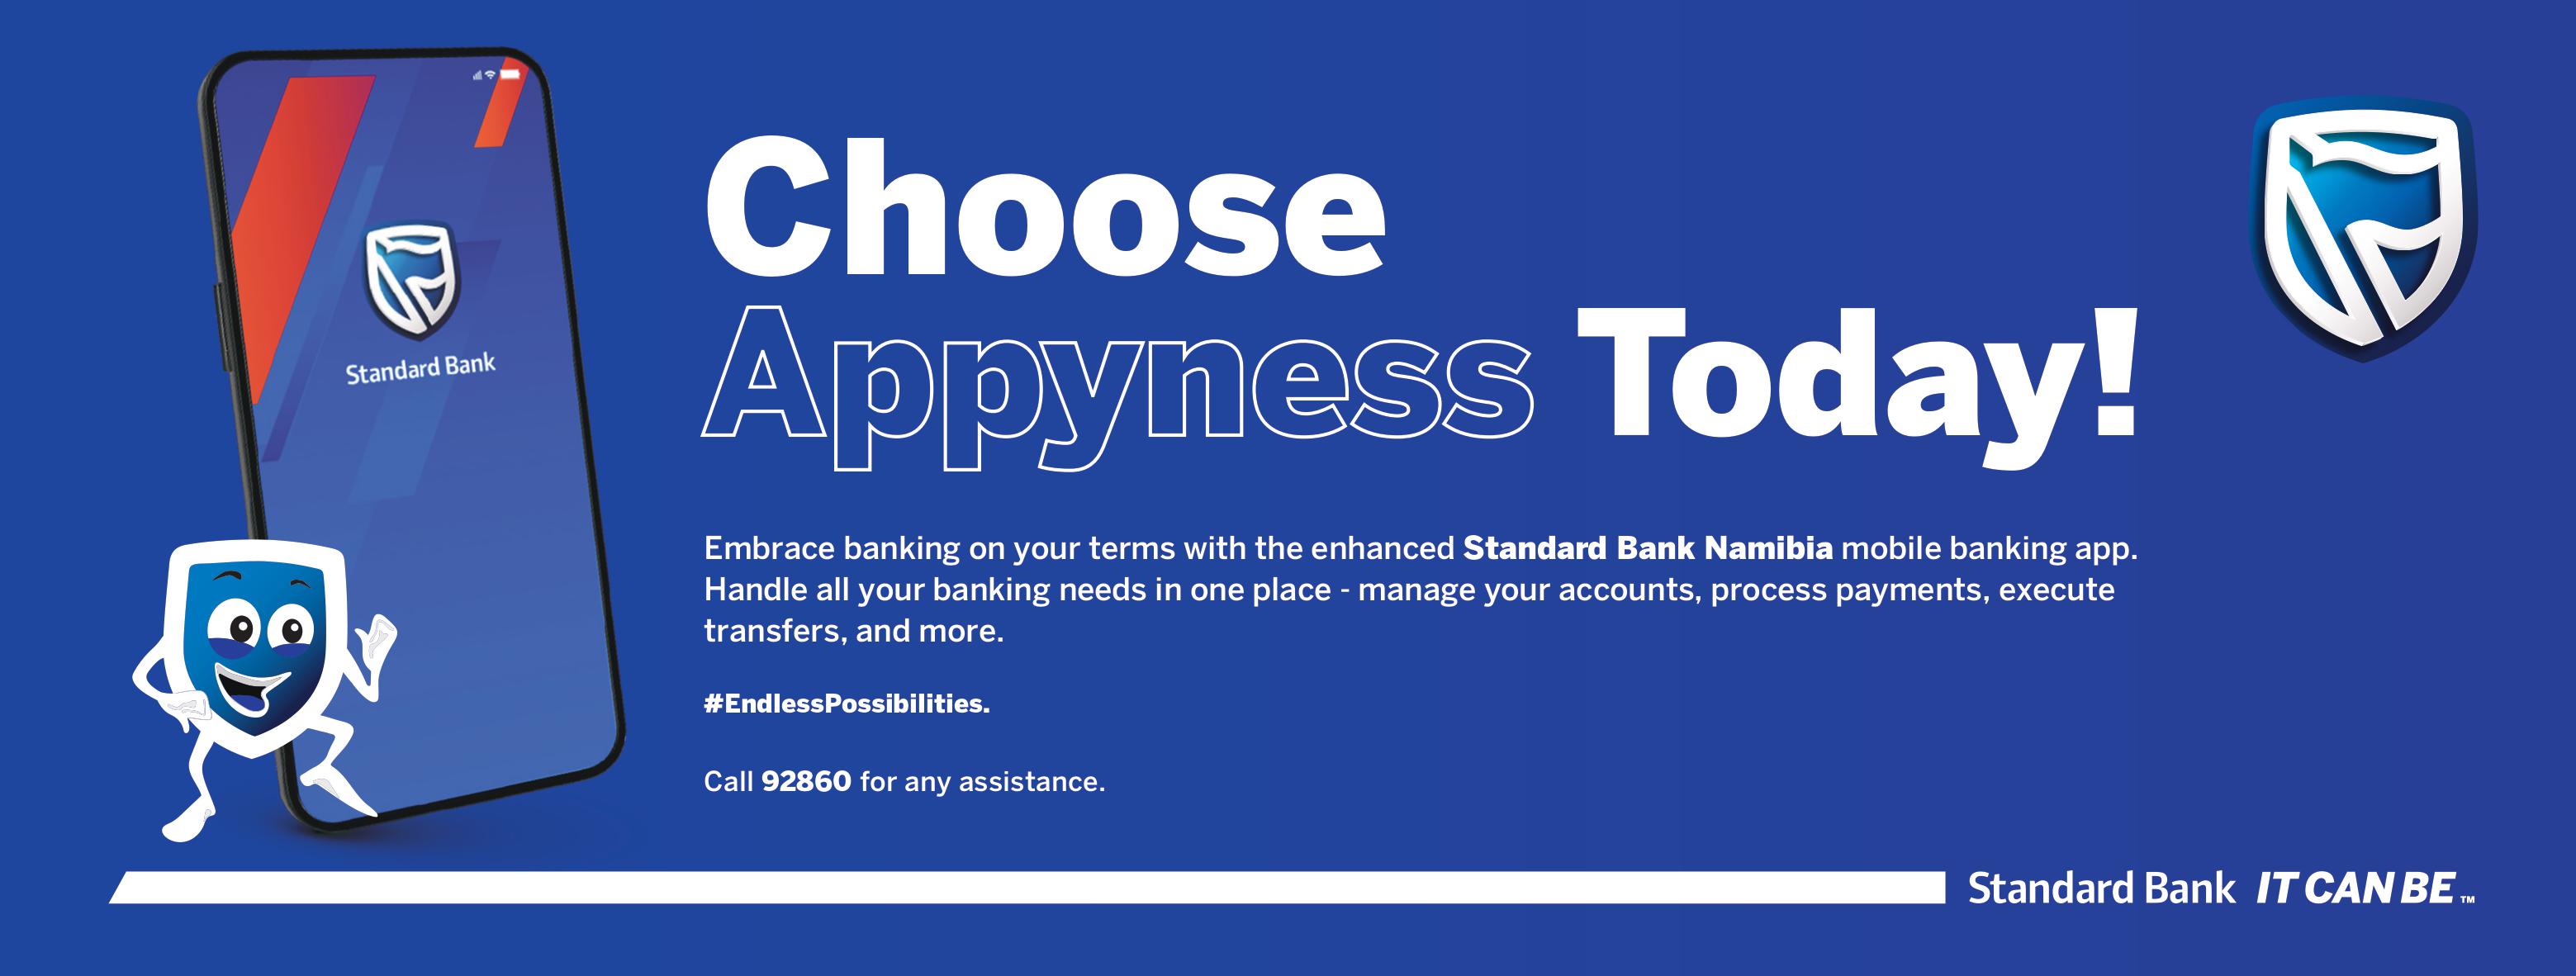 Standard_Bank_Ad